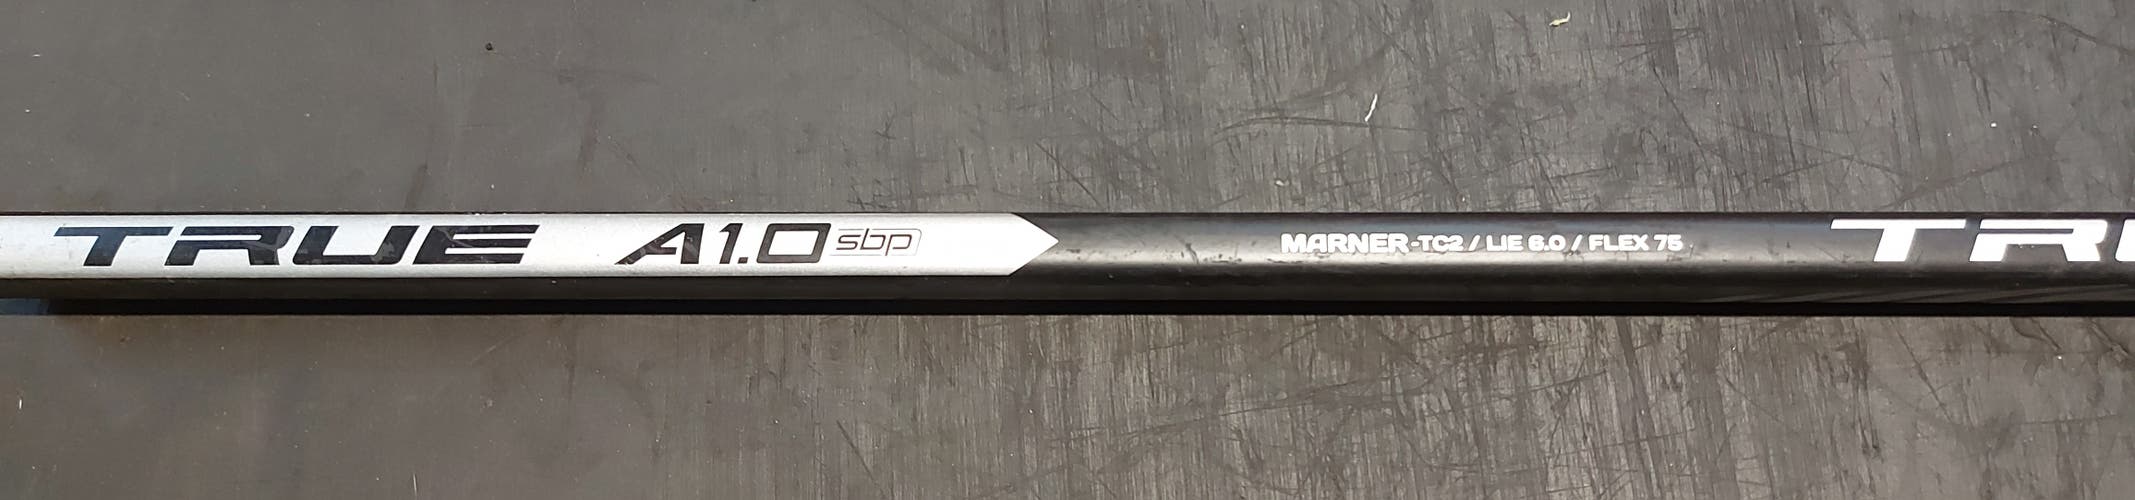 New TRUE A1.0 sbp Senior Left Hand Hockey Stick MARNER - TC2/LIE 6.0/FLEX 85